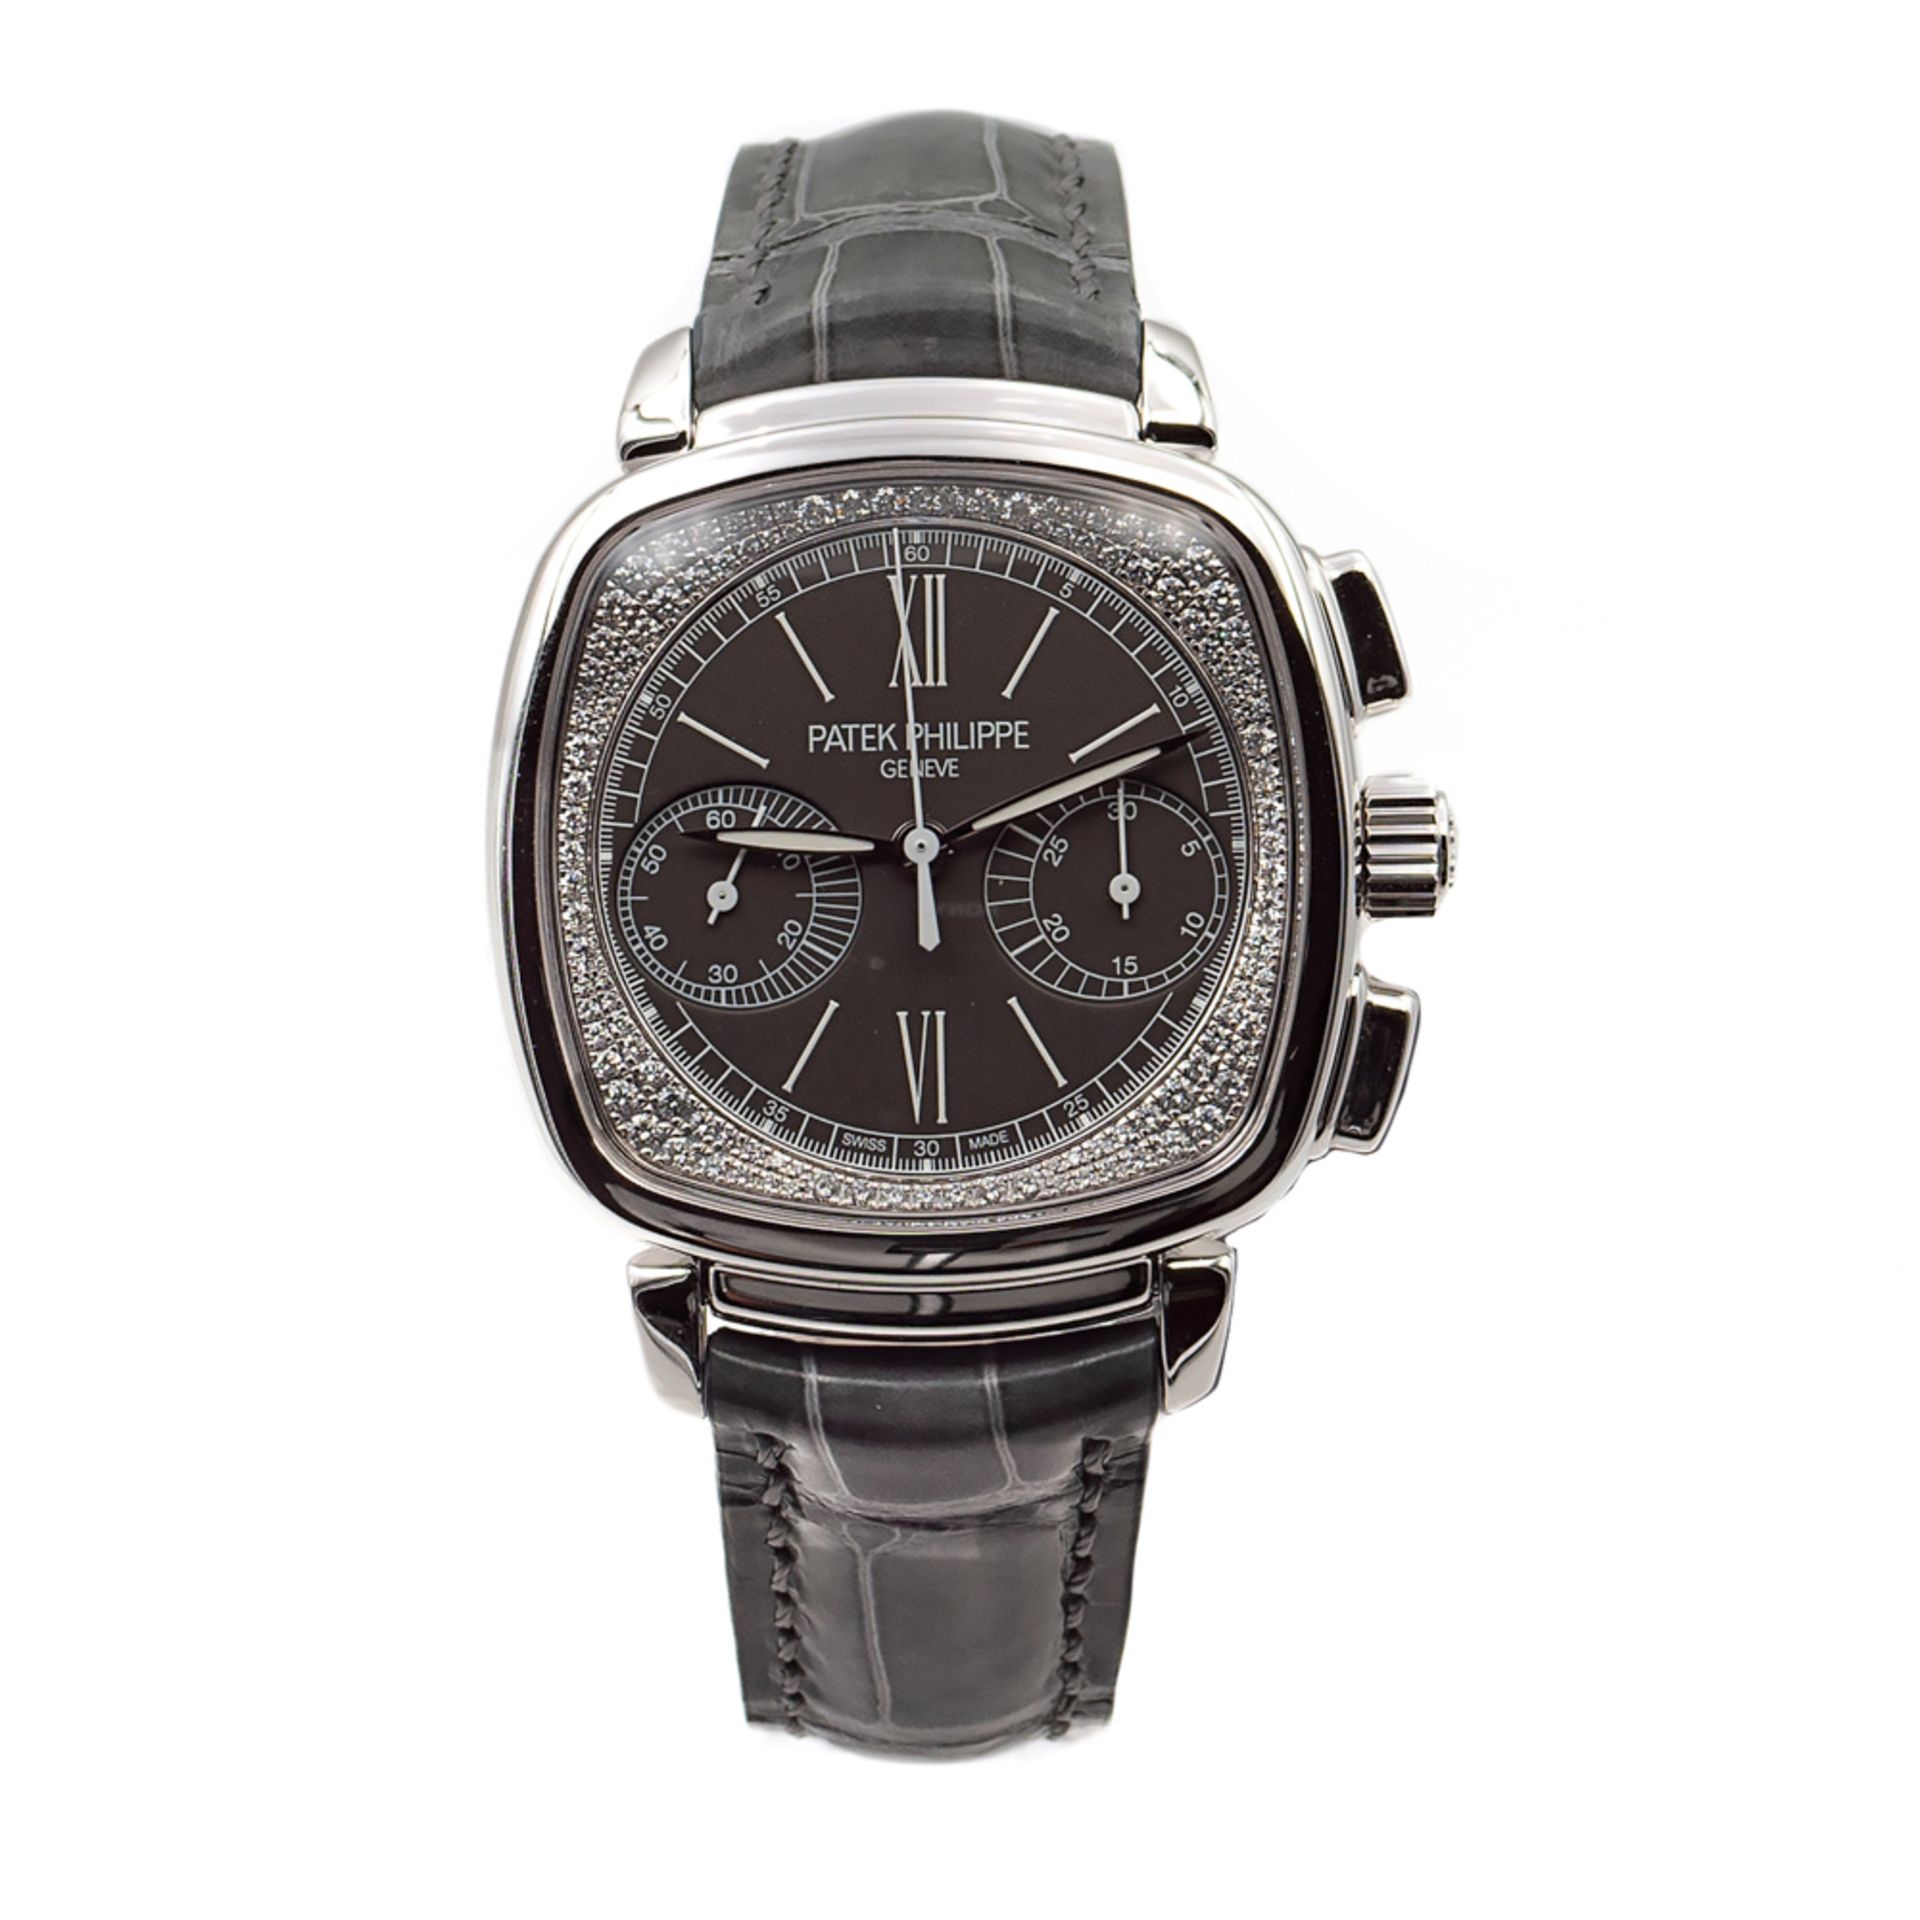 Patek Philippe Ladies First Bicompax Chronograph watch ref. 7071G010